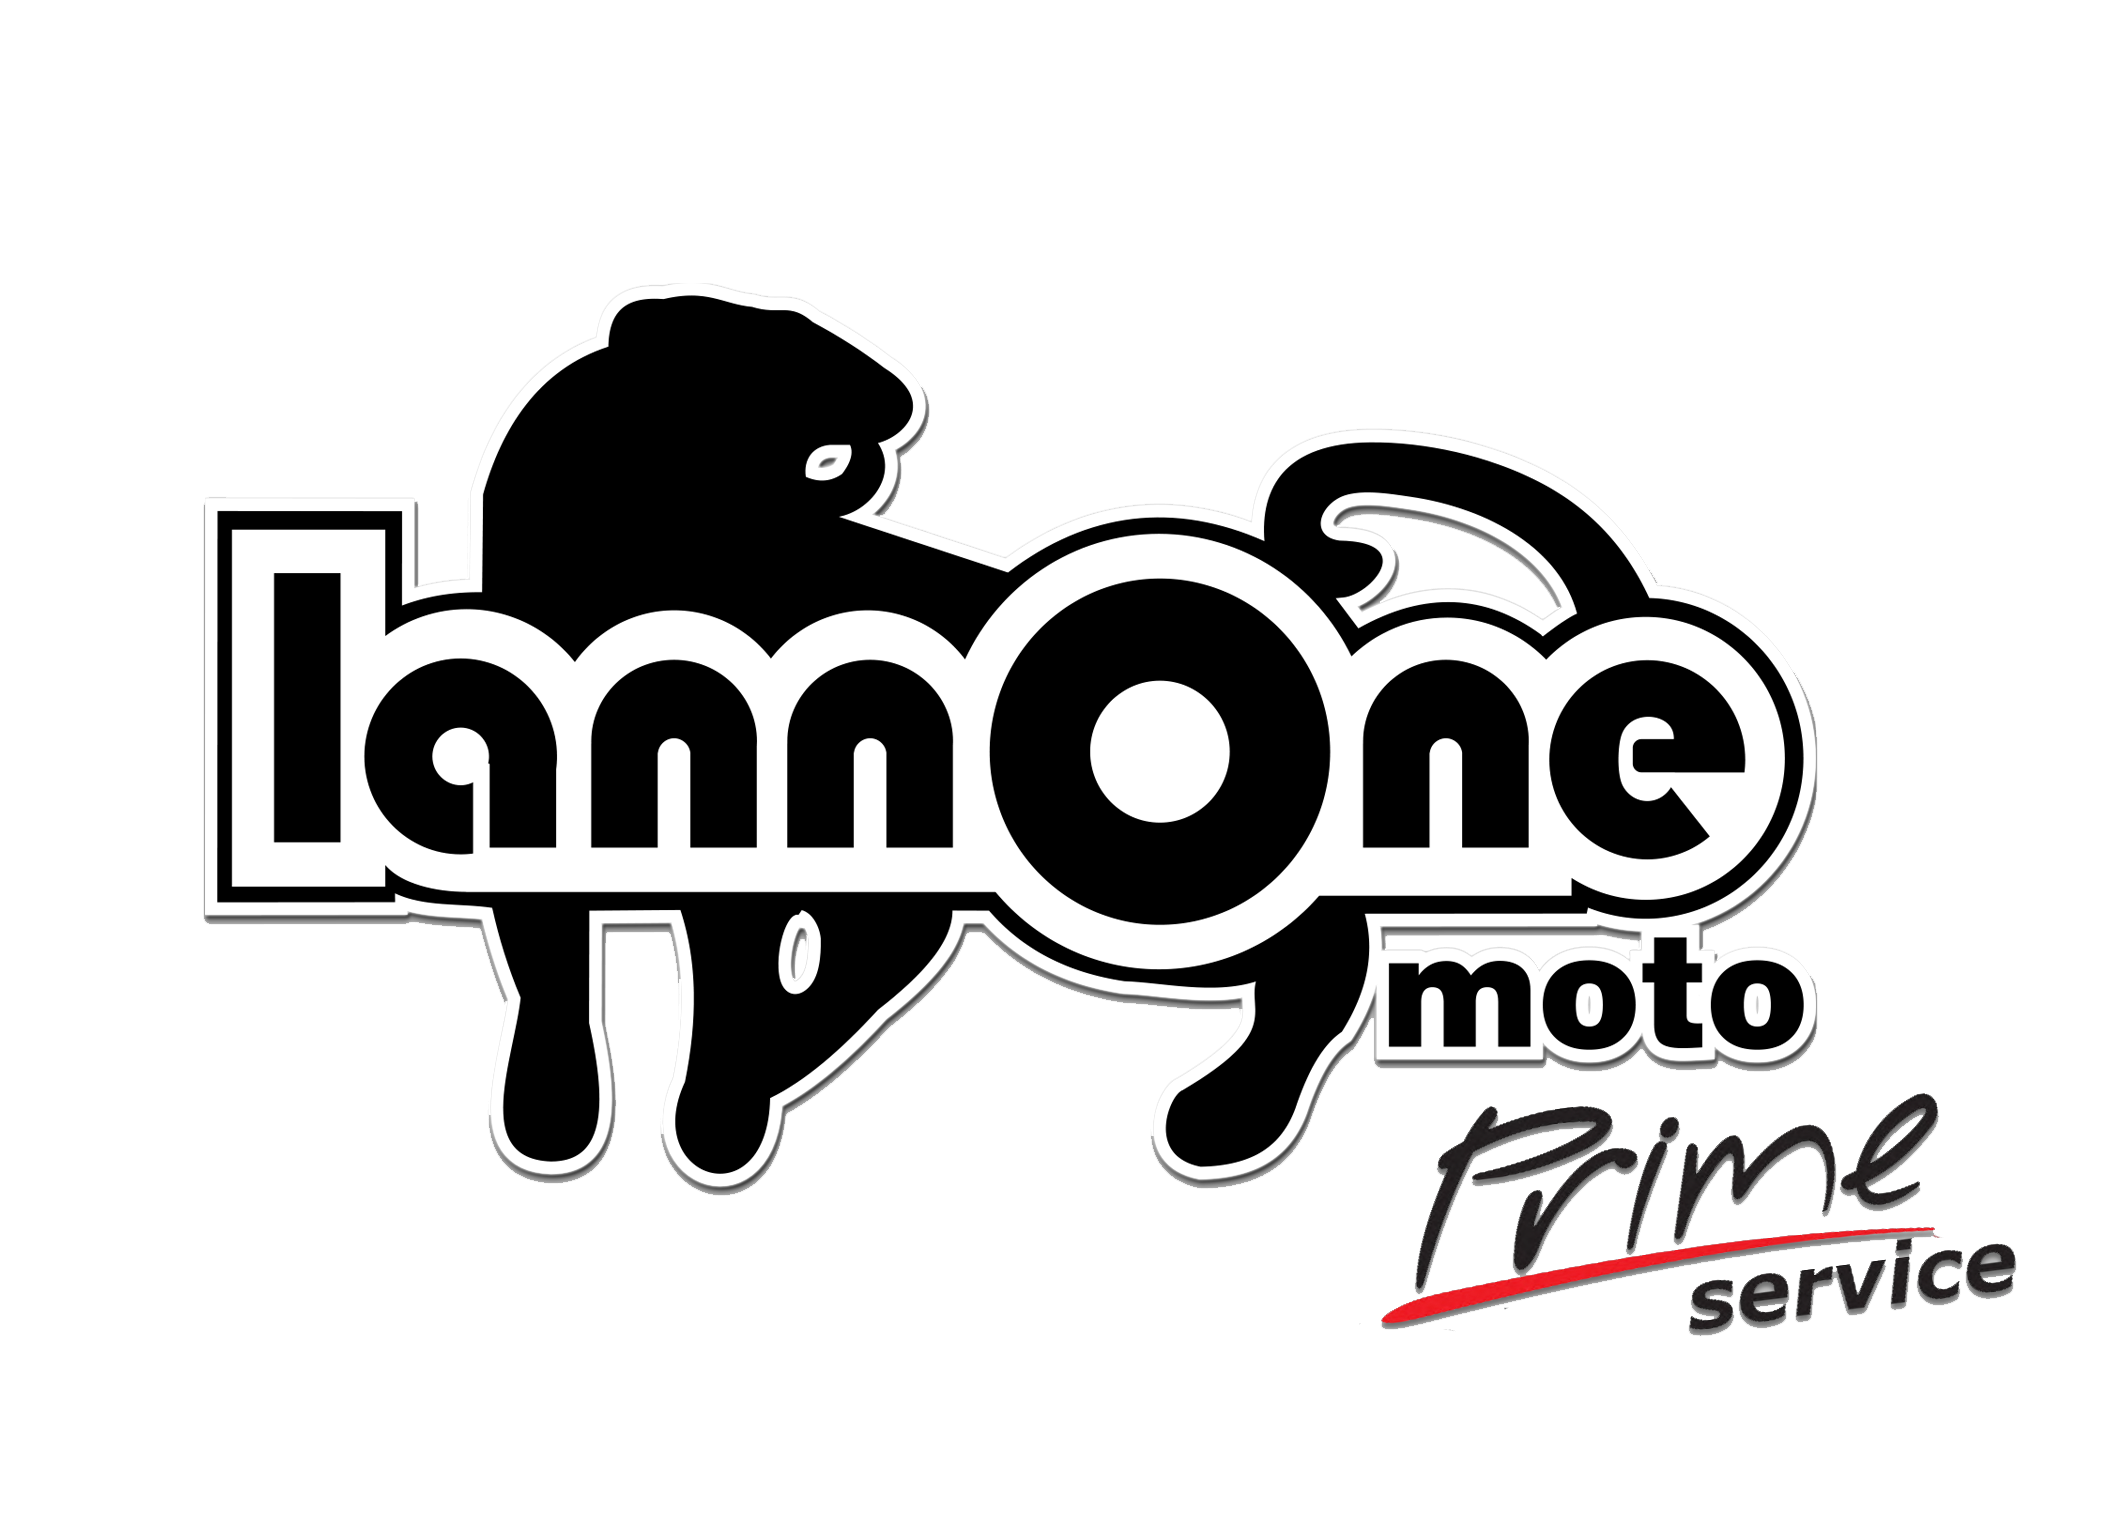 Iannone Moto